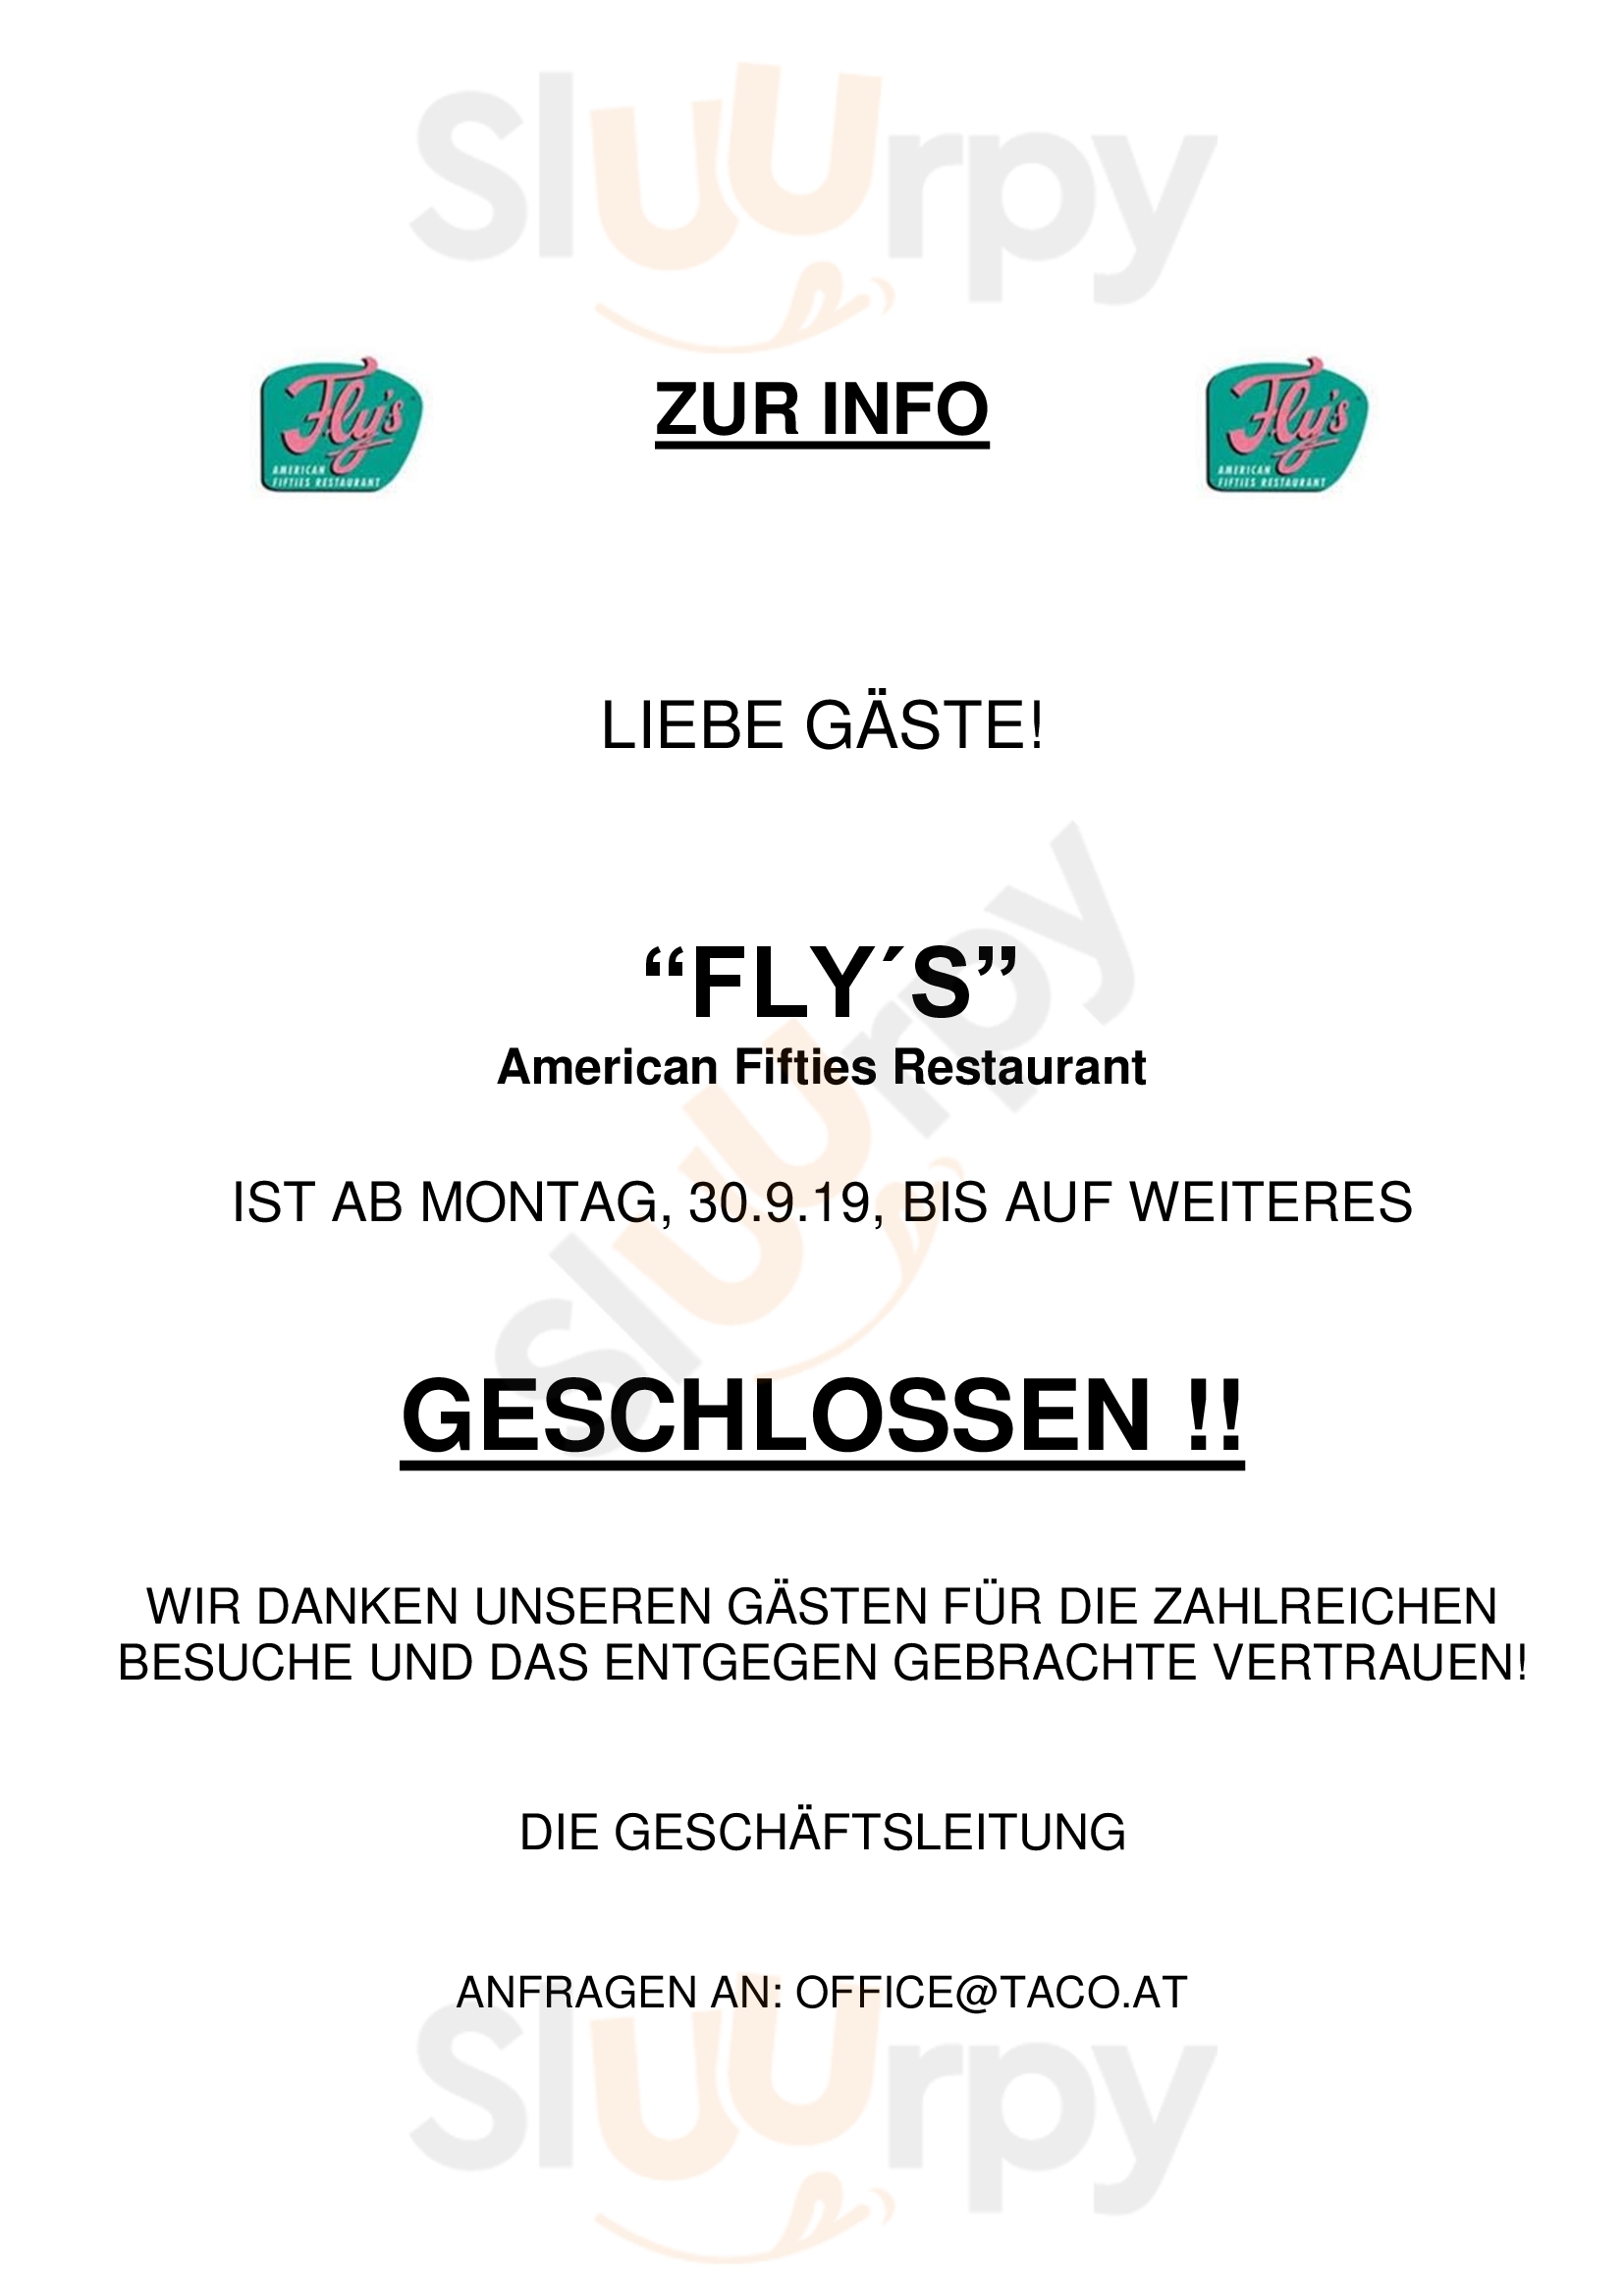 Flys - American Fifties Restaurant Wien Menu - 1